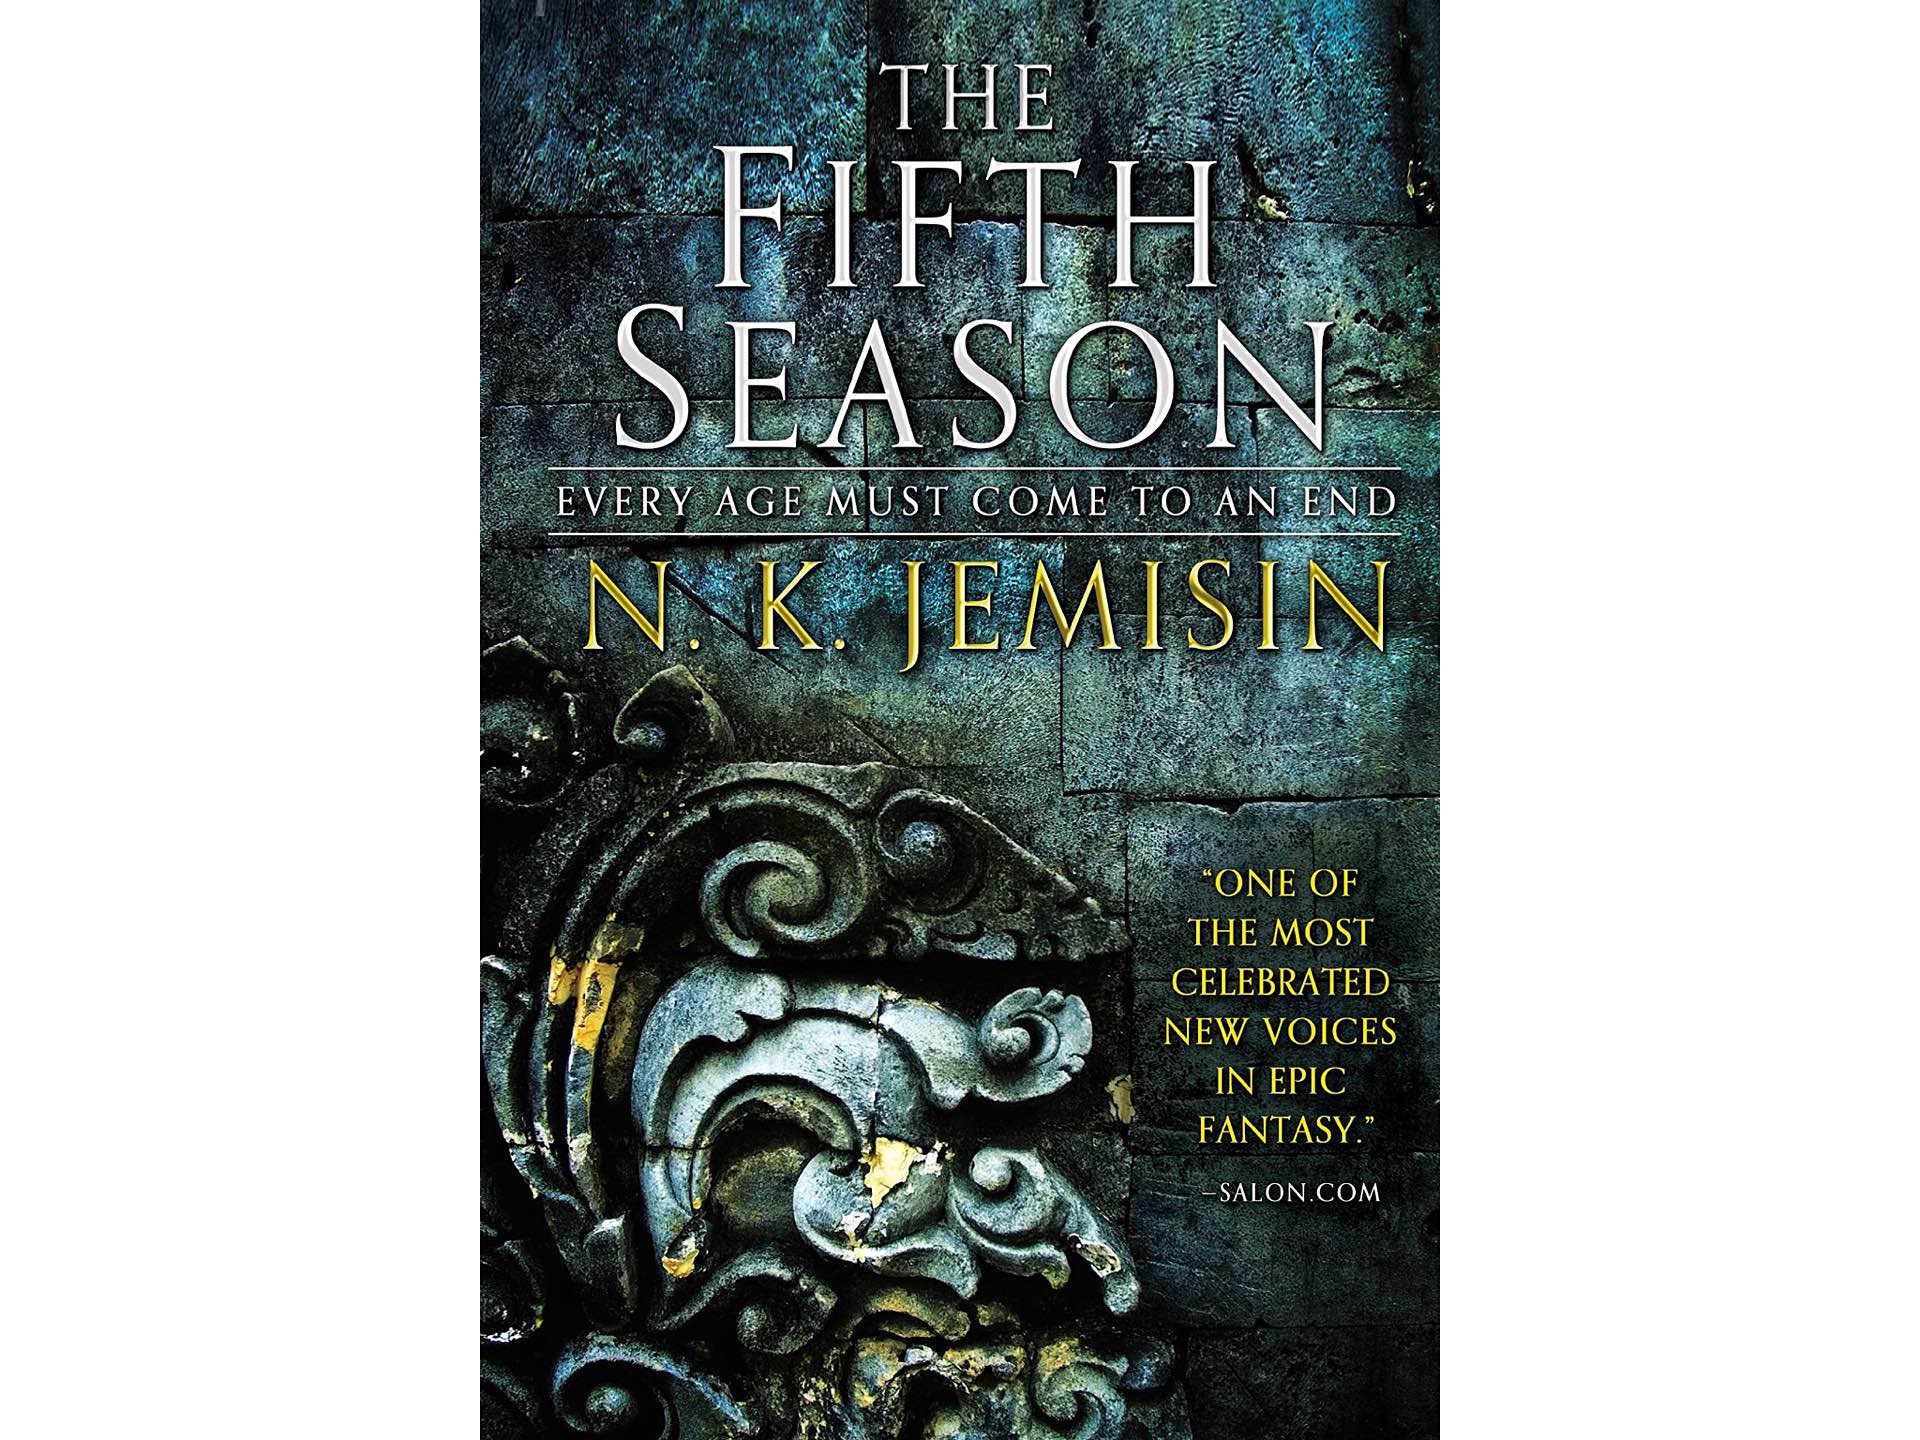 The Fifth Season by N.K. Jemisin.